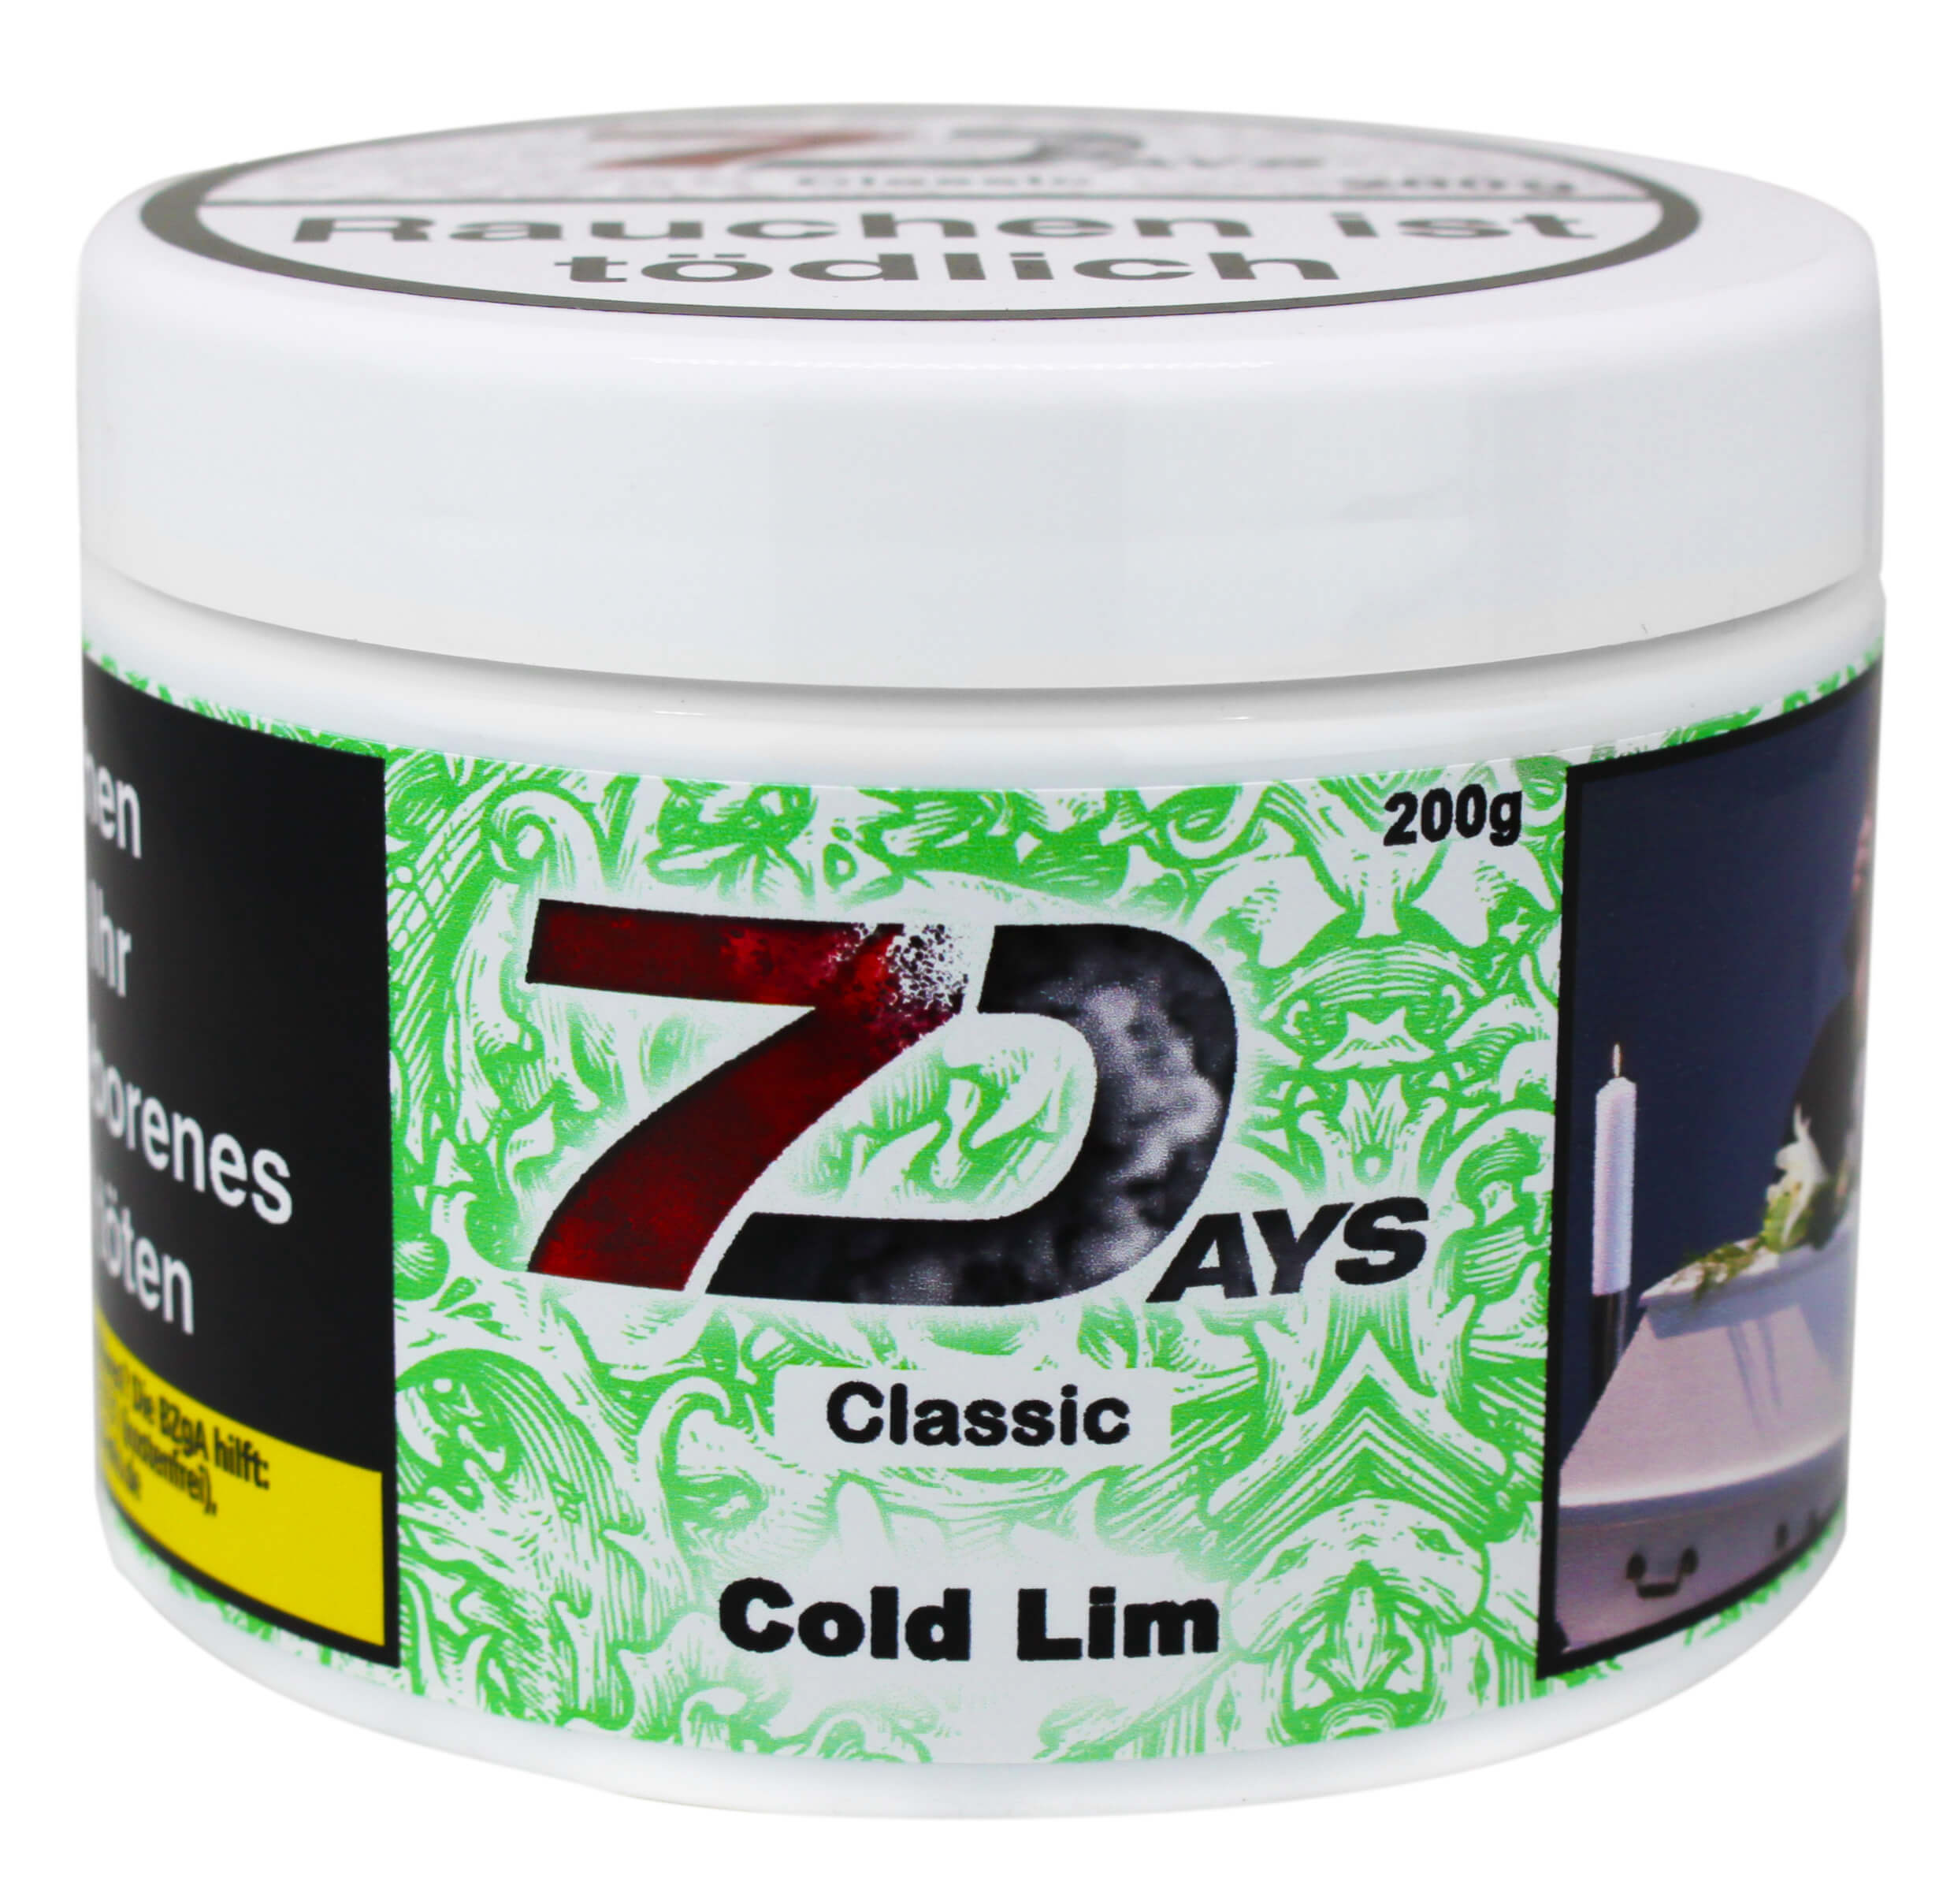 7 Days Tabak - Cold Lim Classic 200g